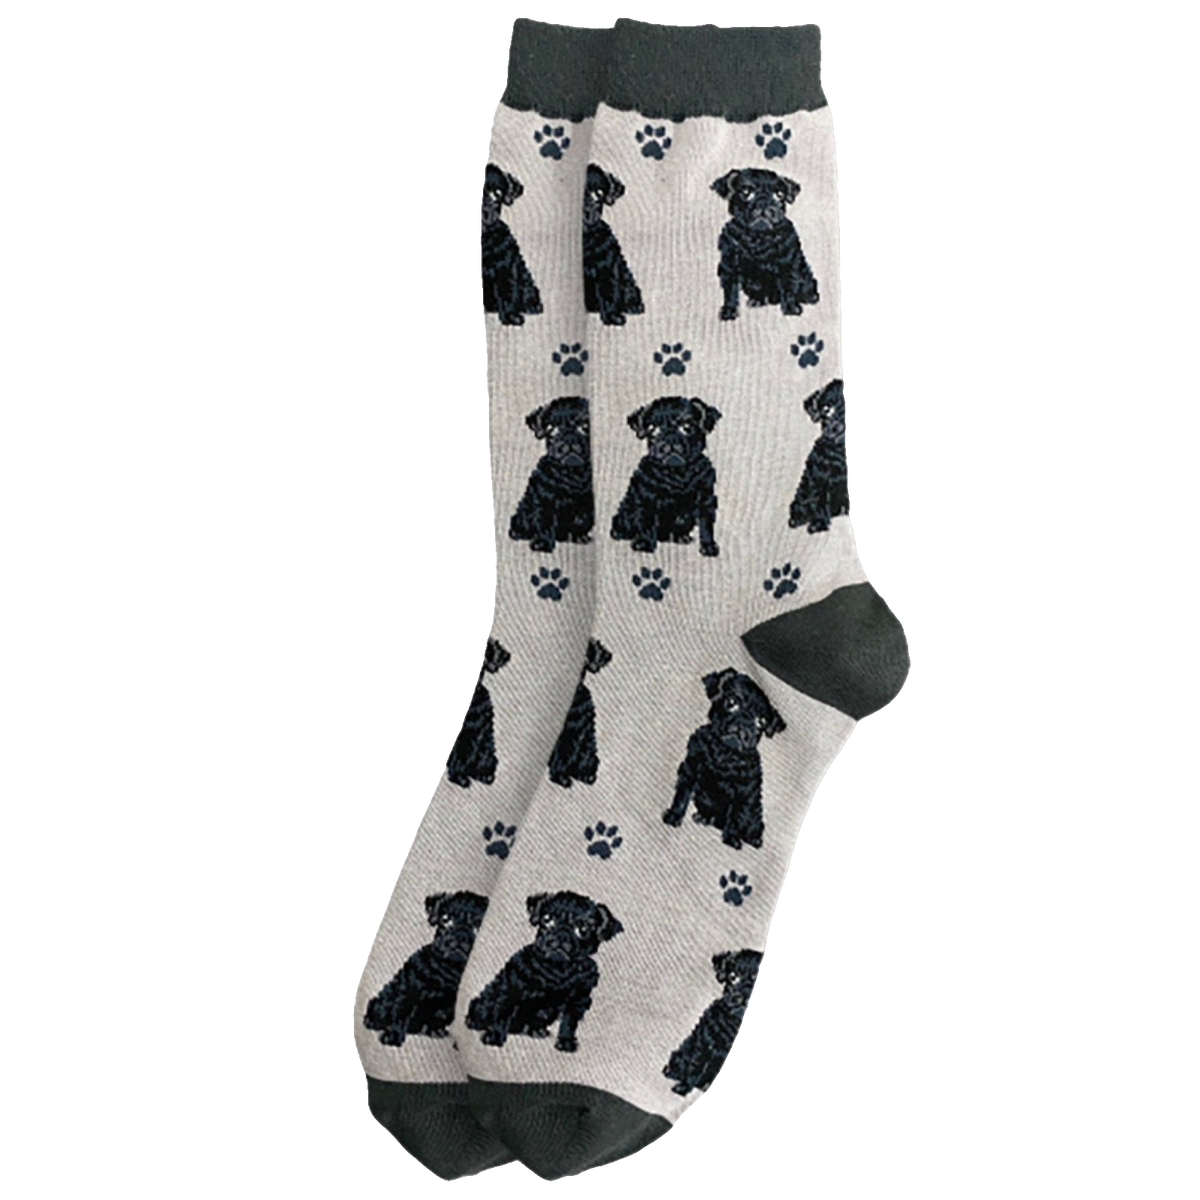 Pug Dog Socks